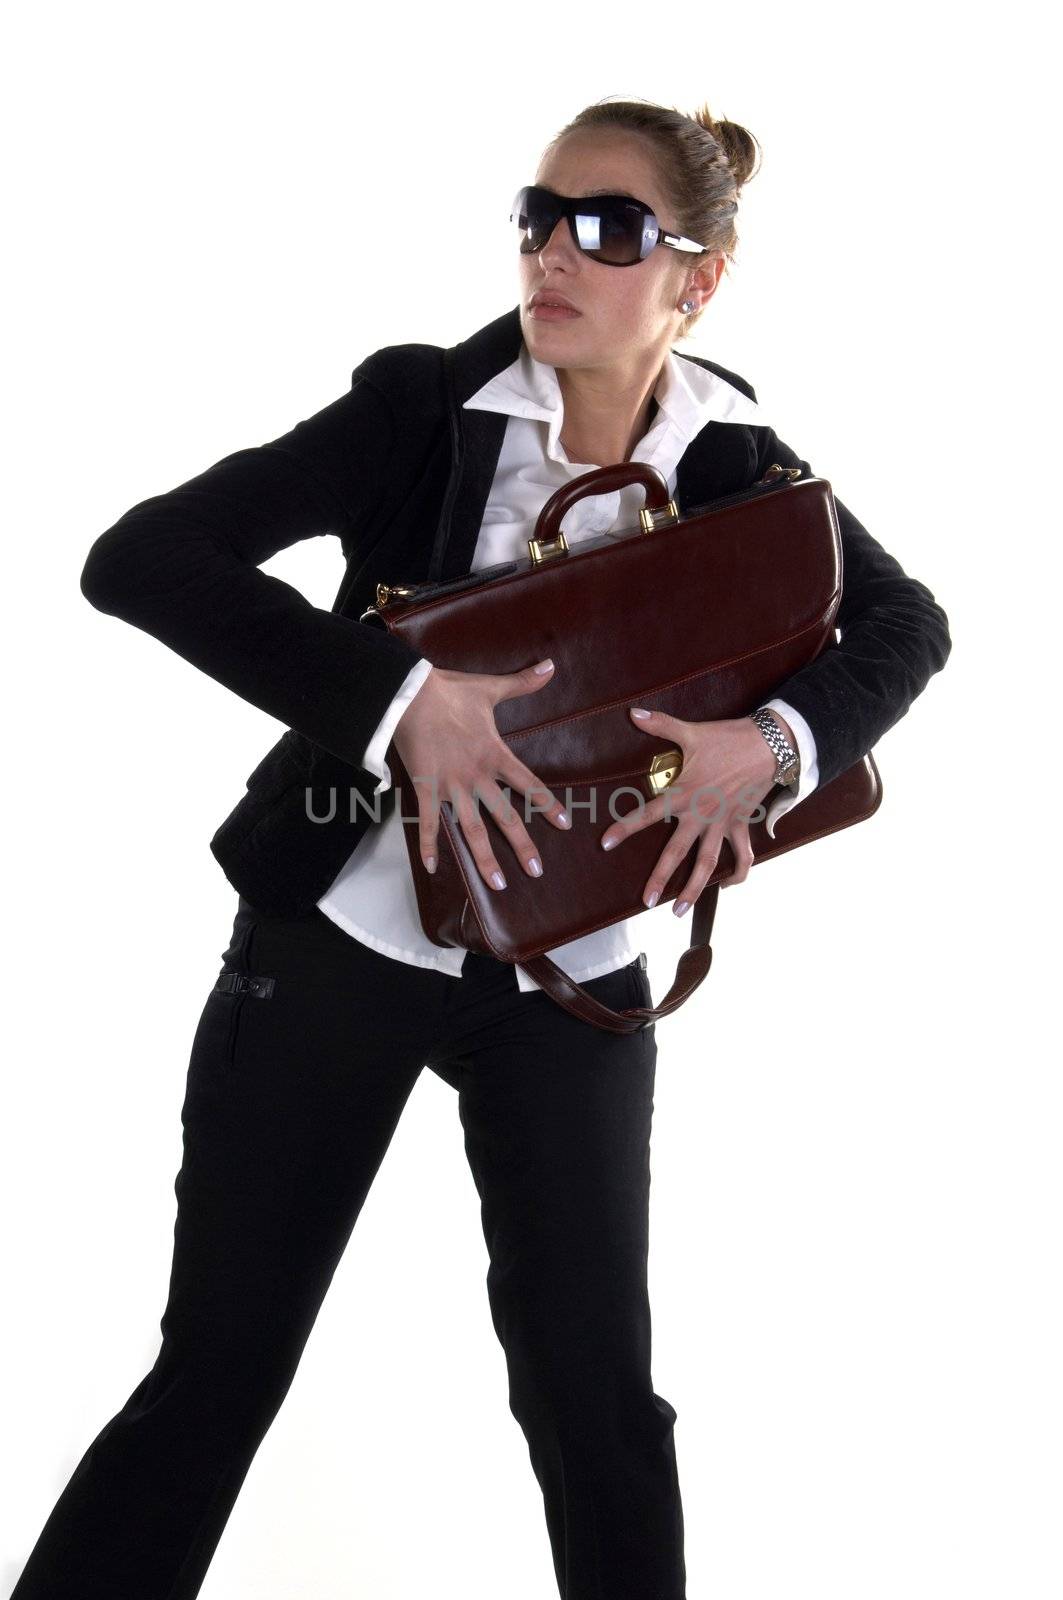 Briefcase in Hand of Businessman